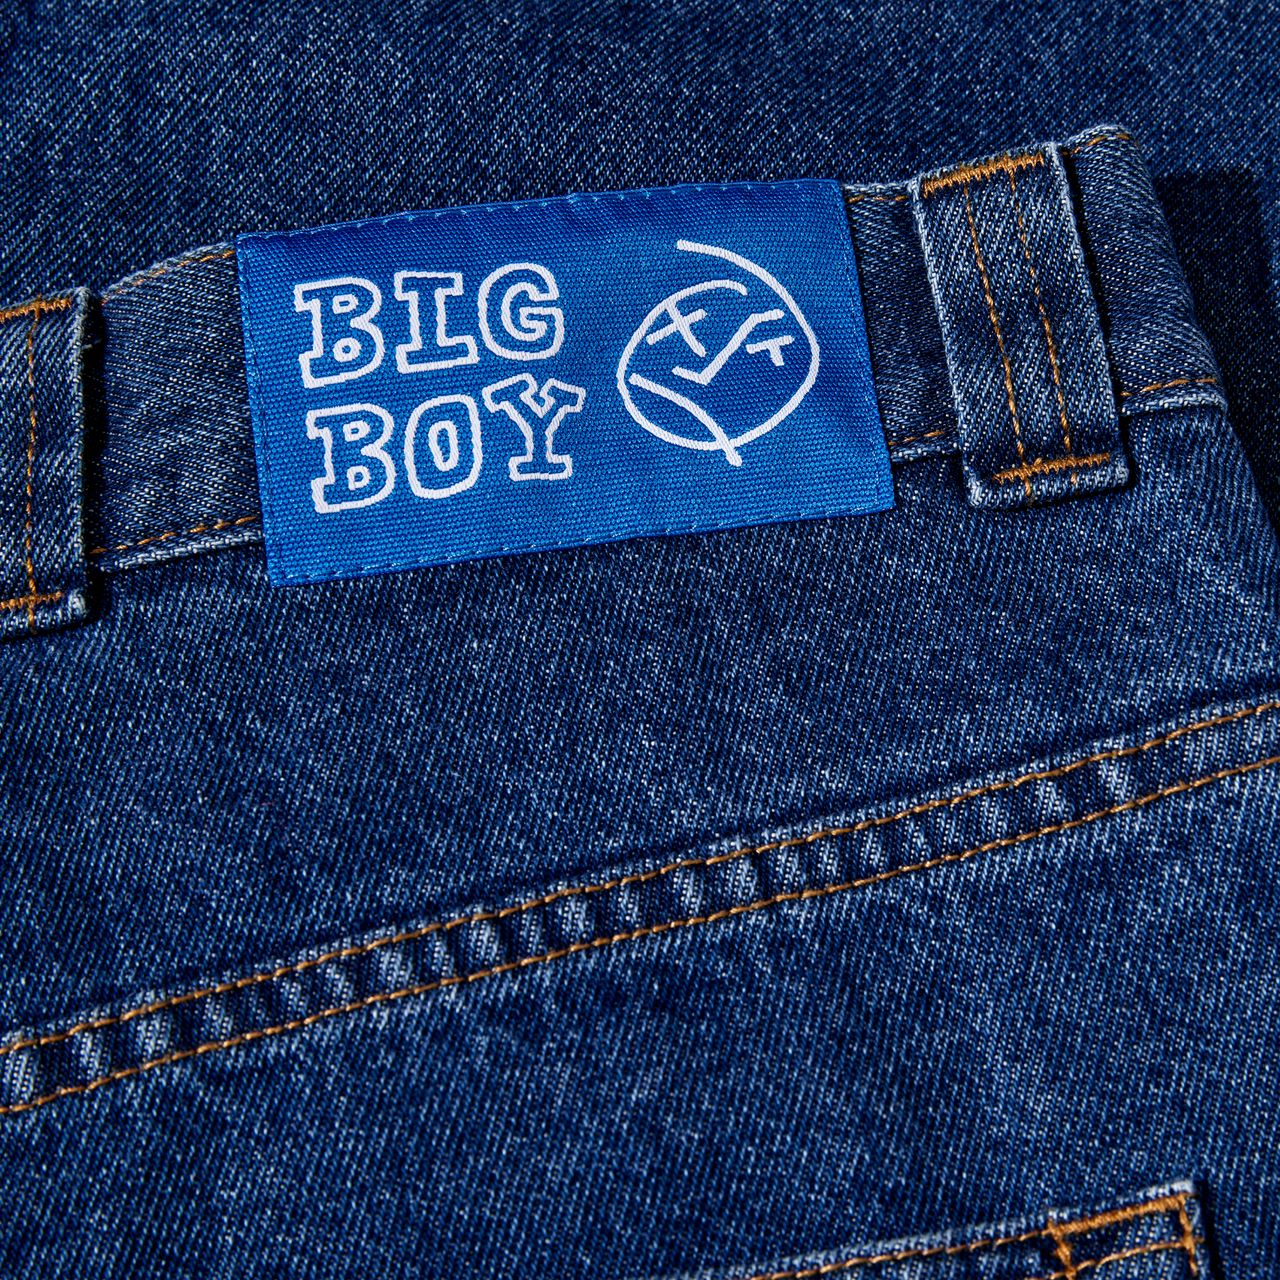 Polar Skate Co デニム パンツ ビッグボーイ BIG BOY Jeans ジーンズ ネイビーブルー ロゴ ワッペン 刺繍